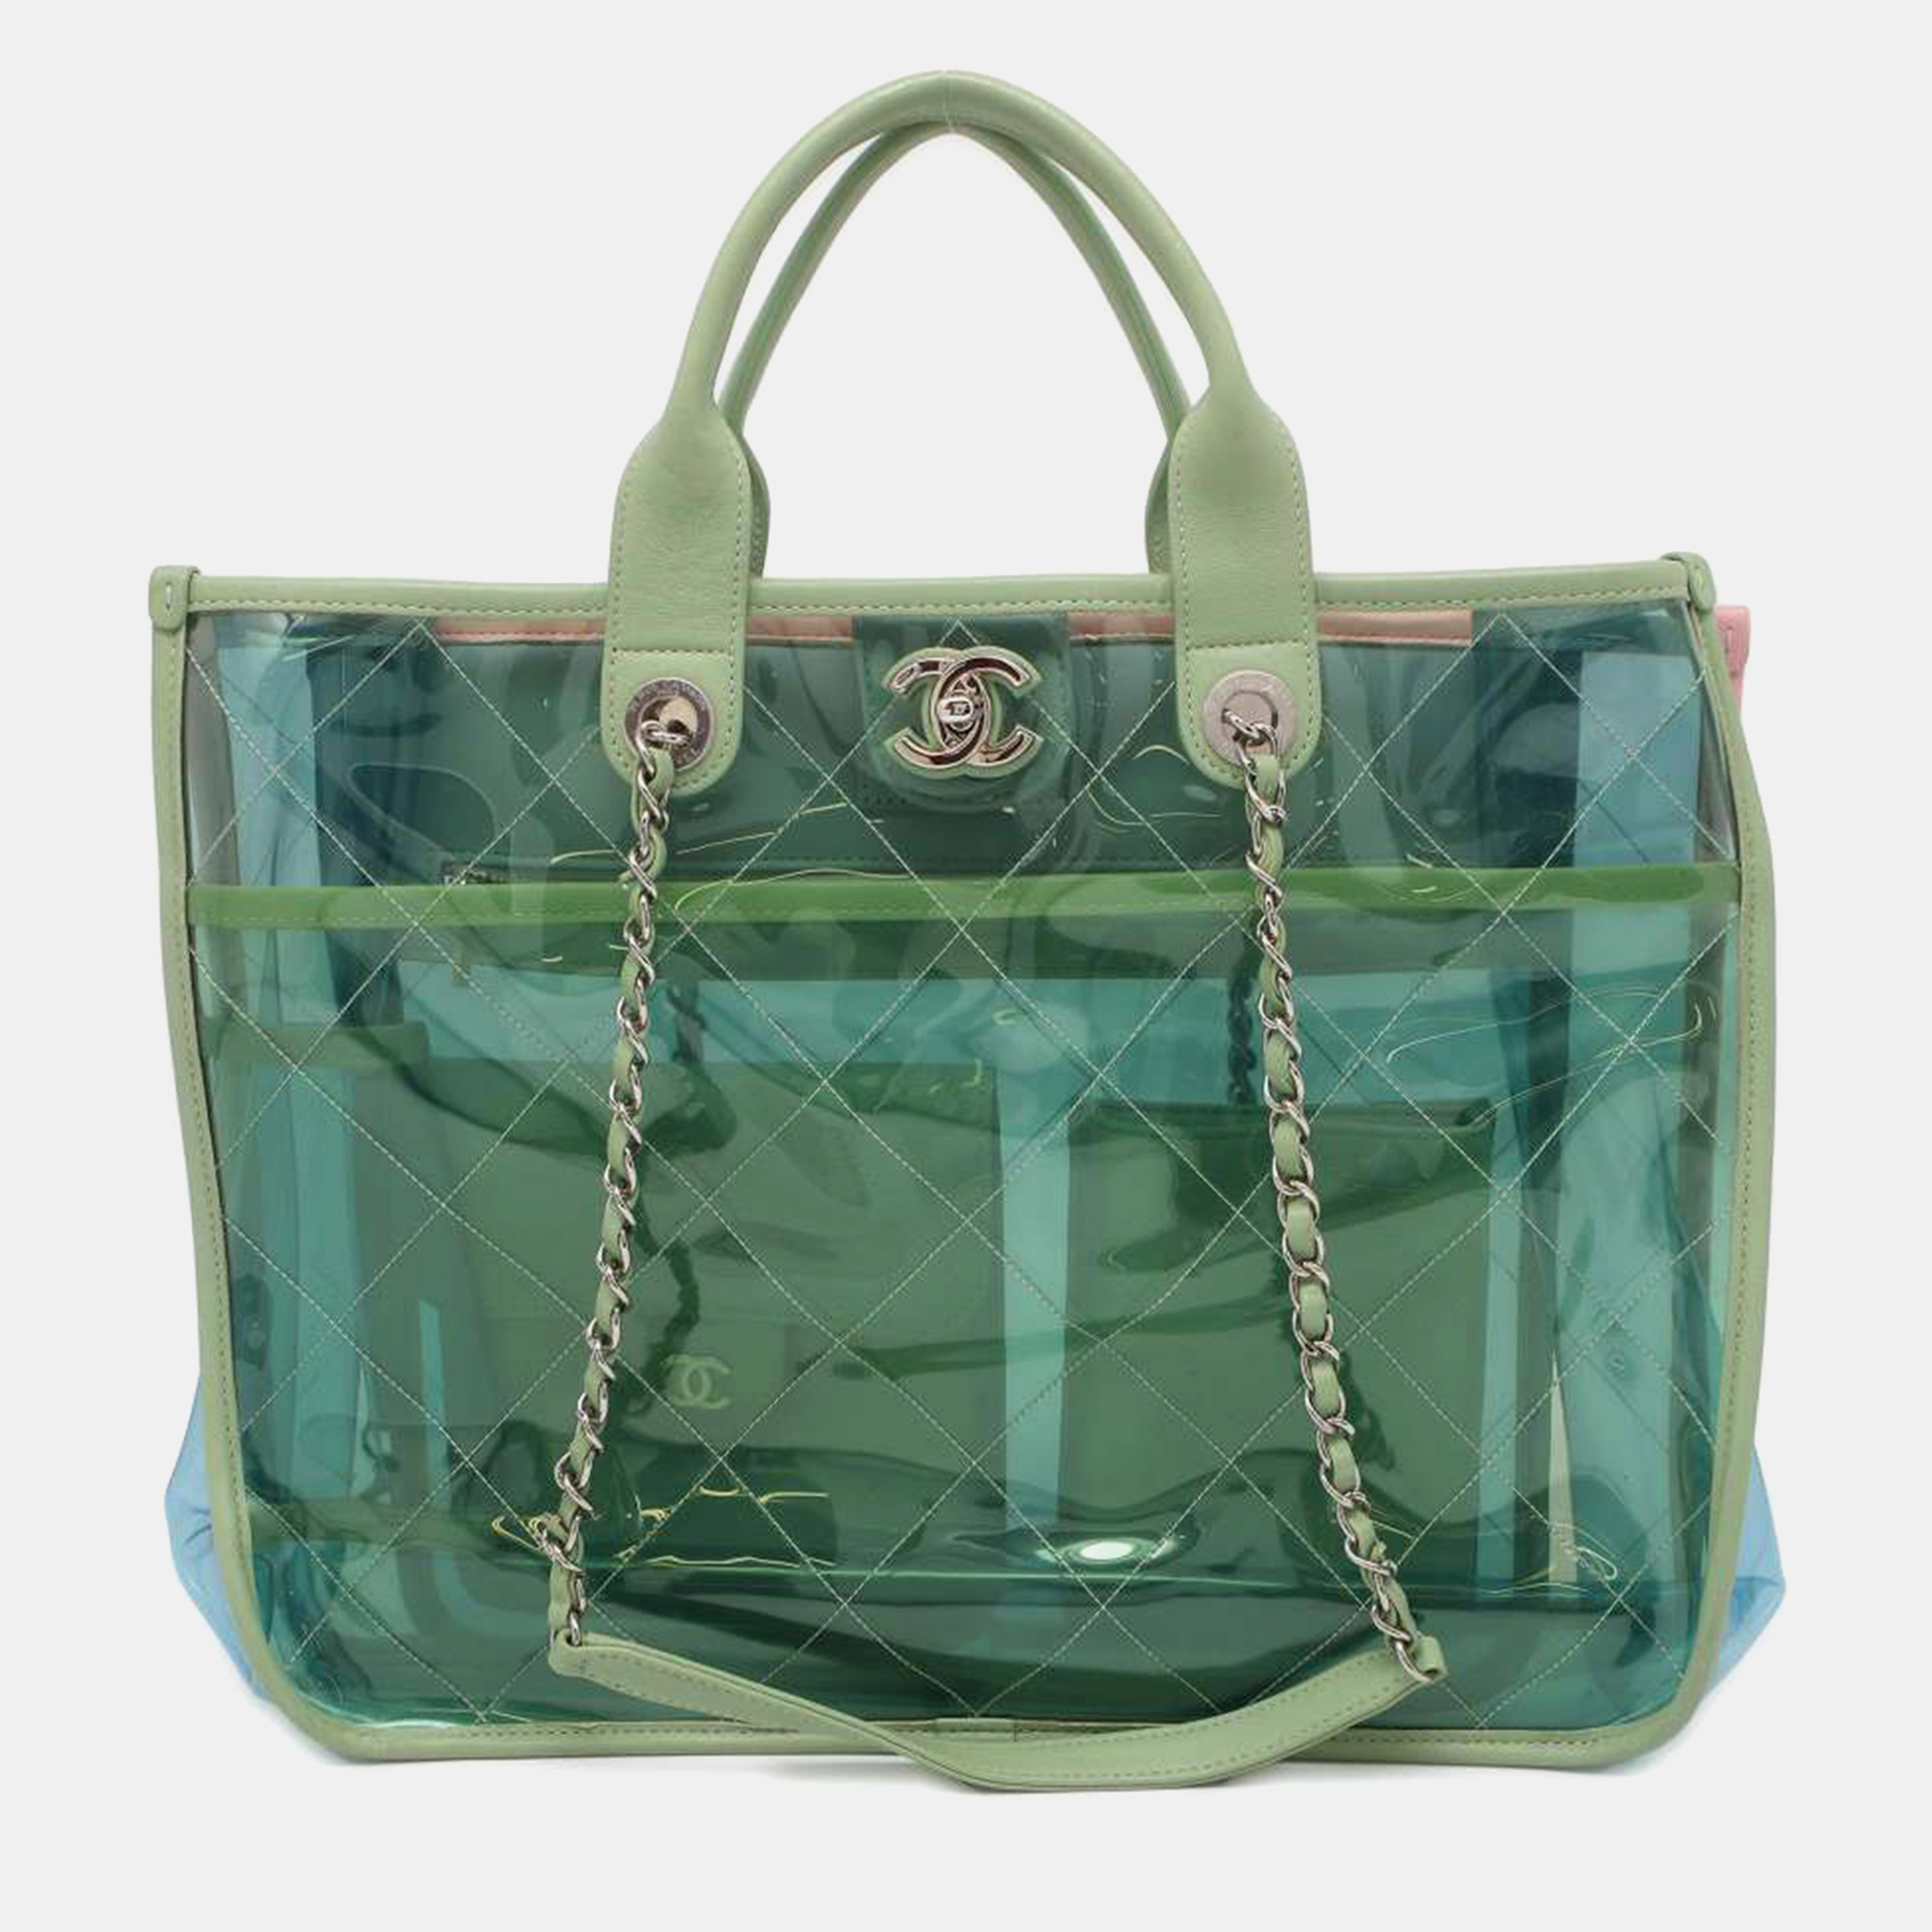 Chanel green coco splash shopping tote bag